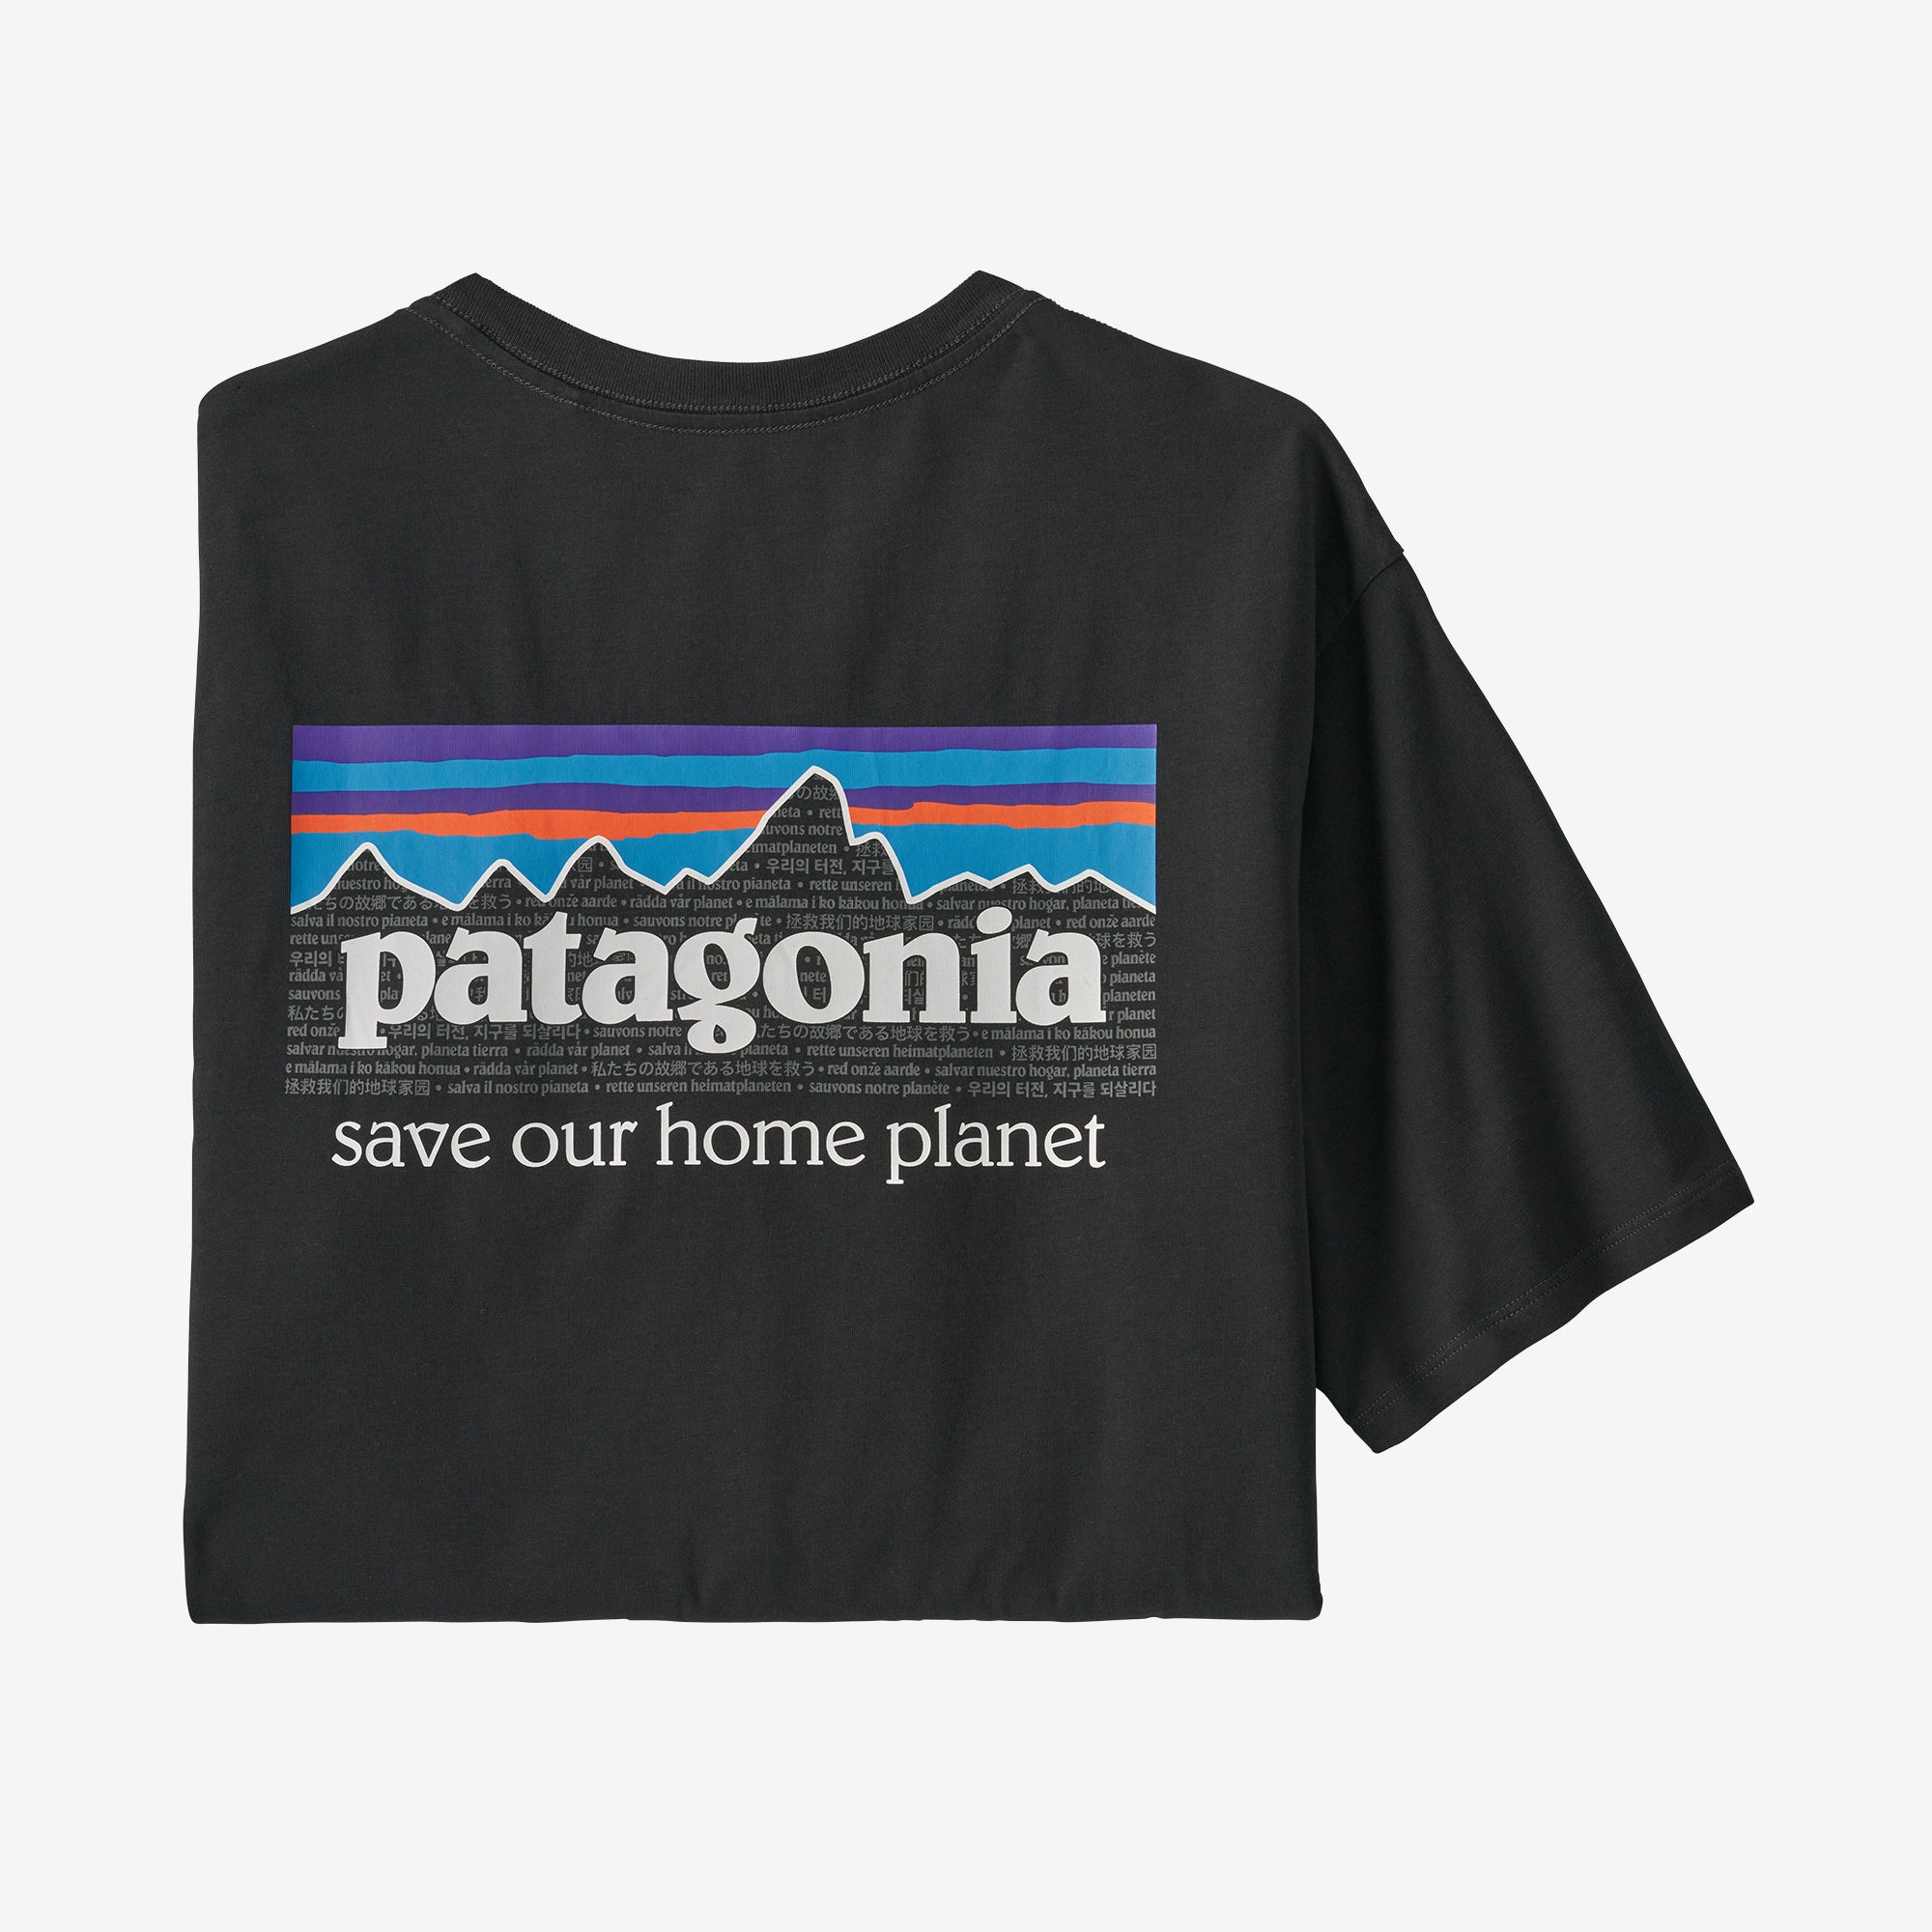 Polera Hombre P-6 Mission Organic T-Shirt